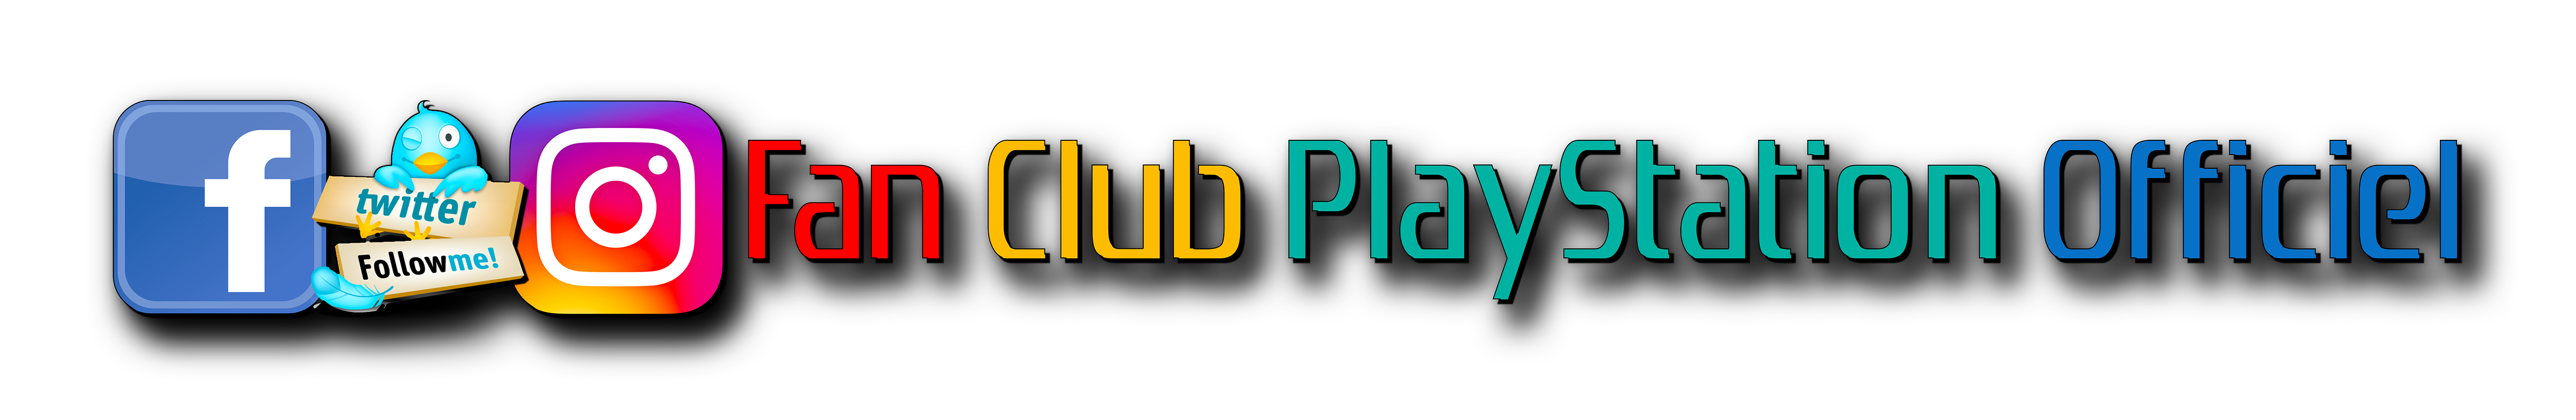 Fan Club PlayStation Officiel V2 petit